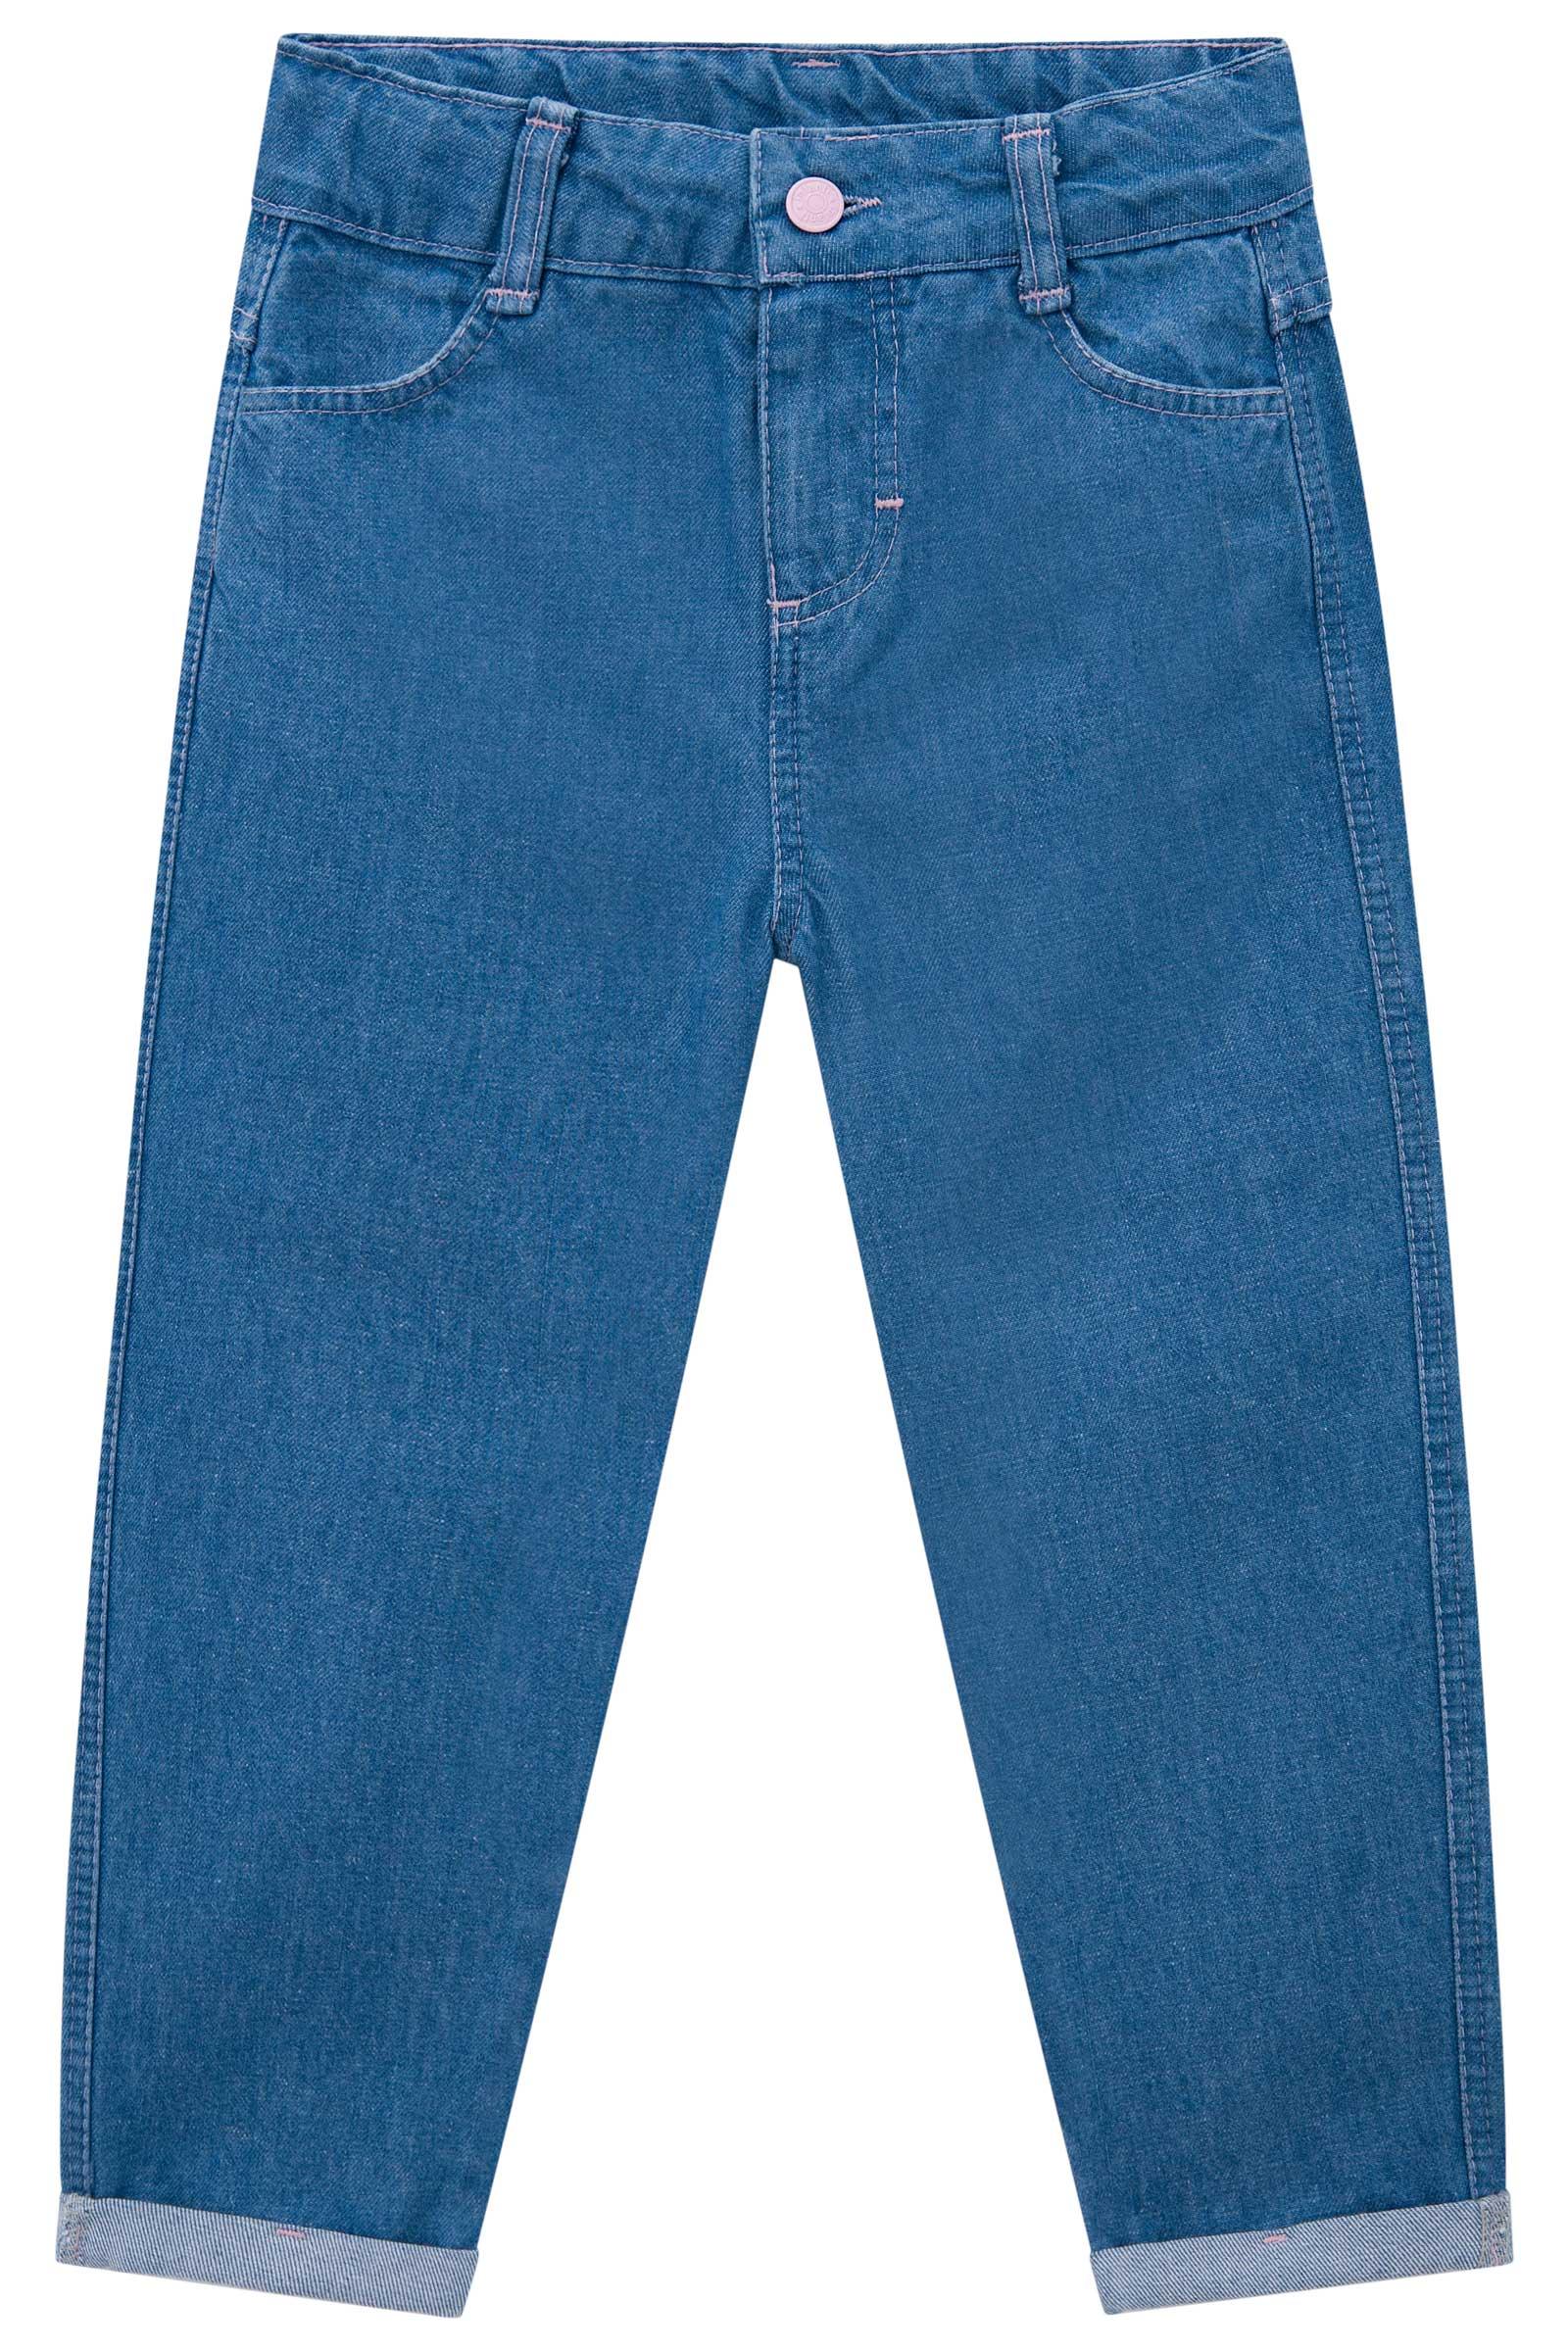 Calça Jeans Infanti - Arisa Kids